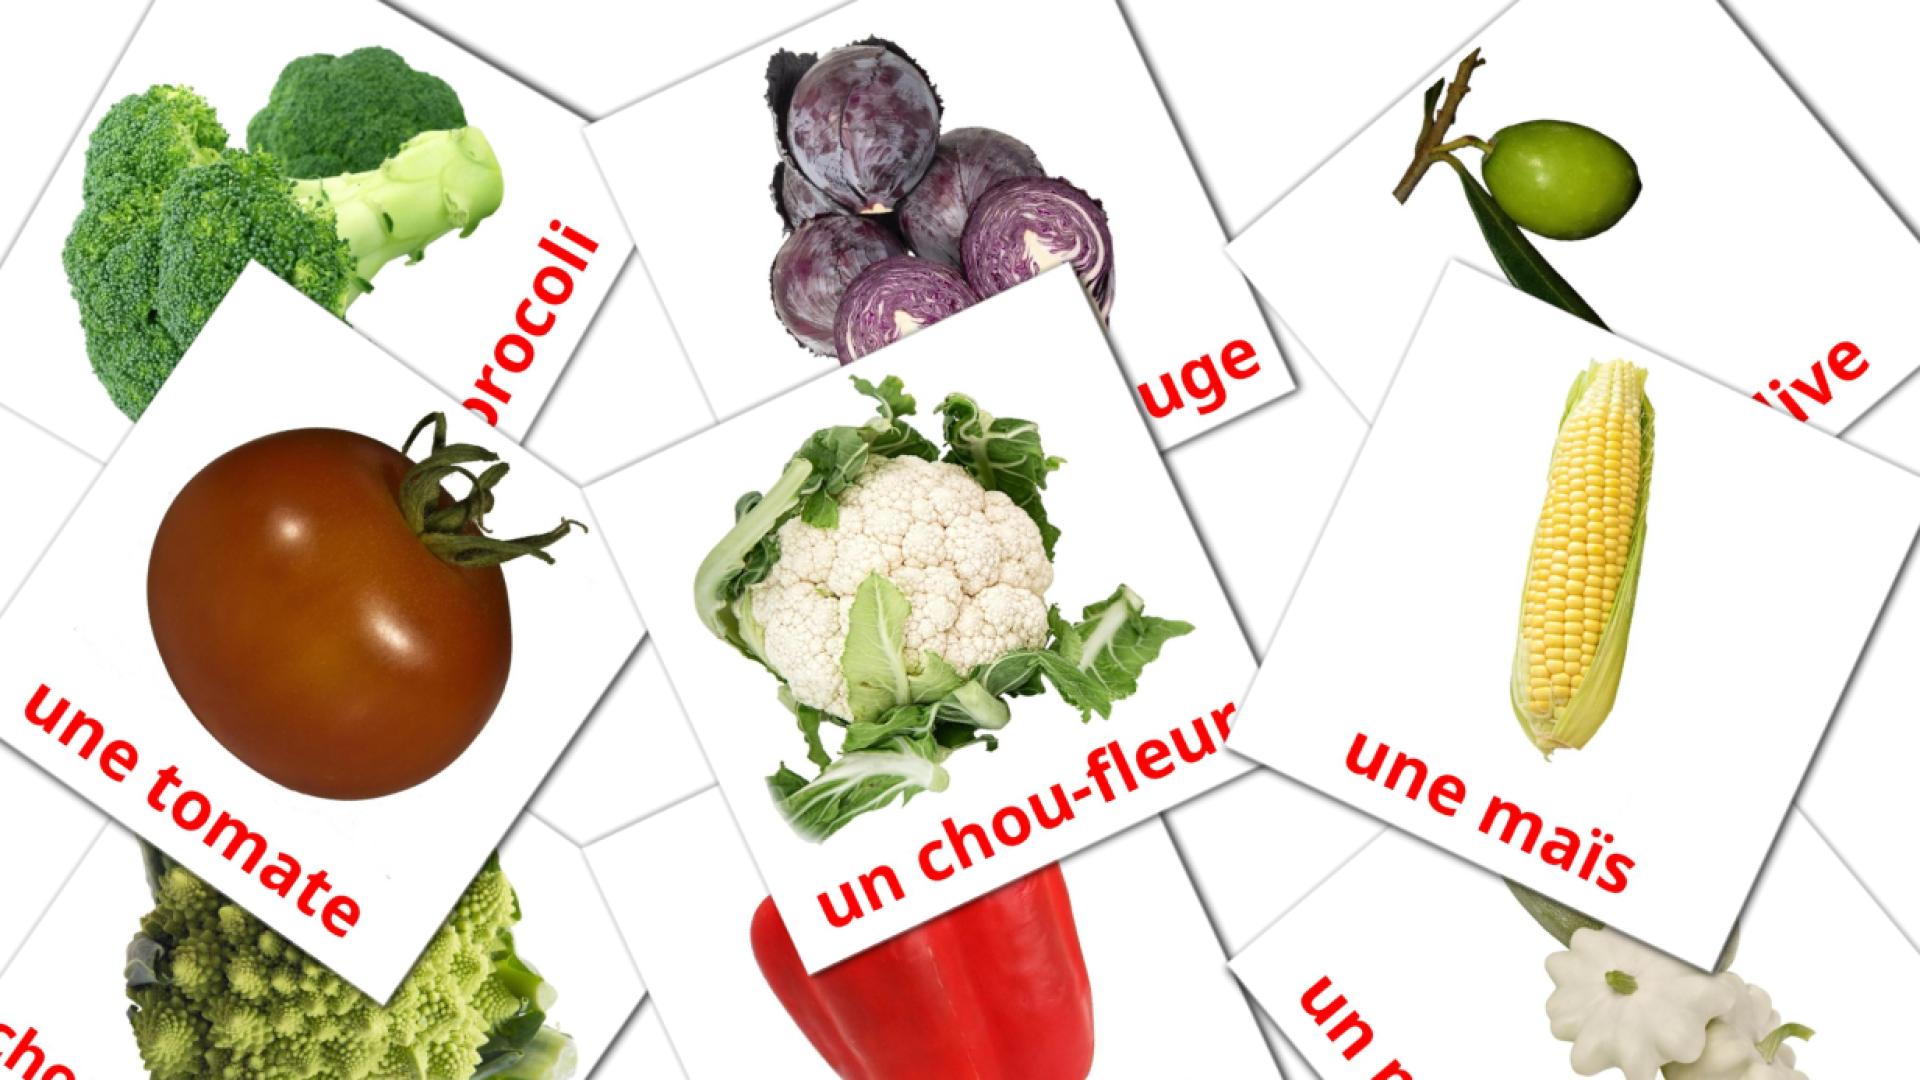 Bildkarten für Les Légumes